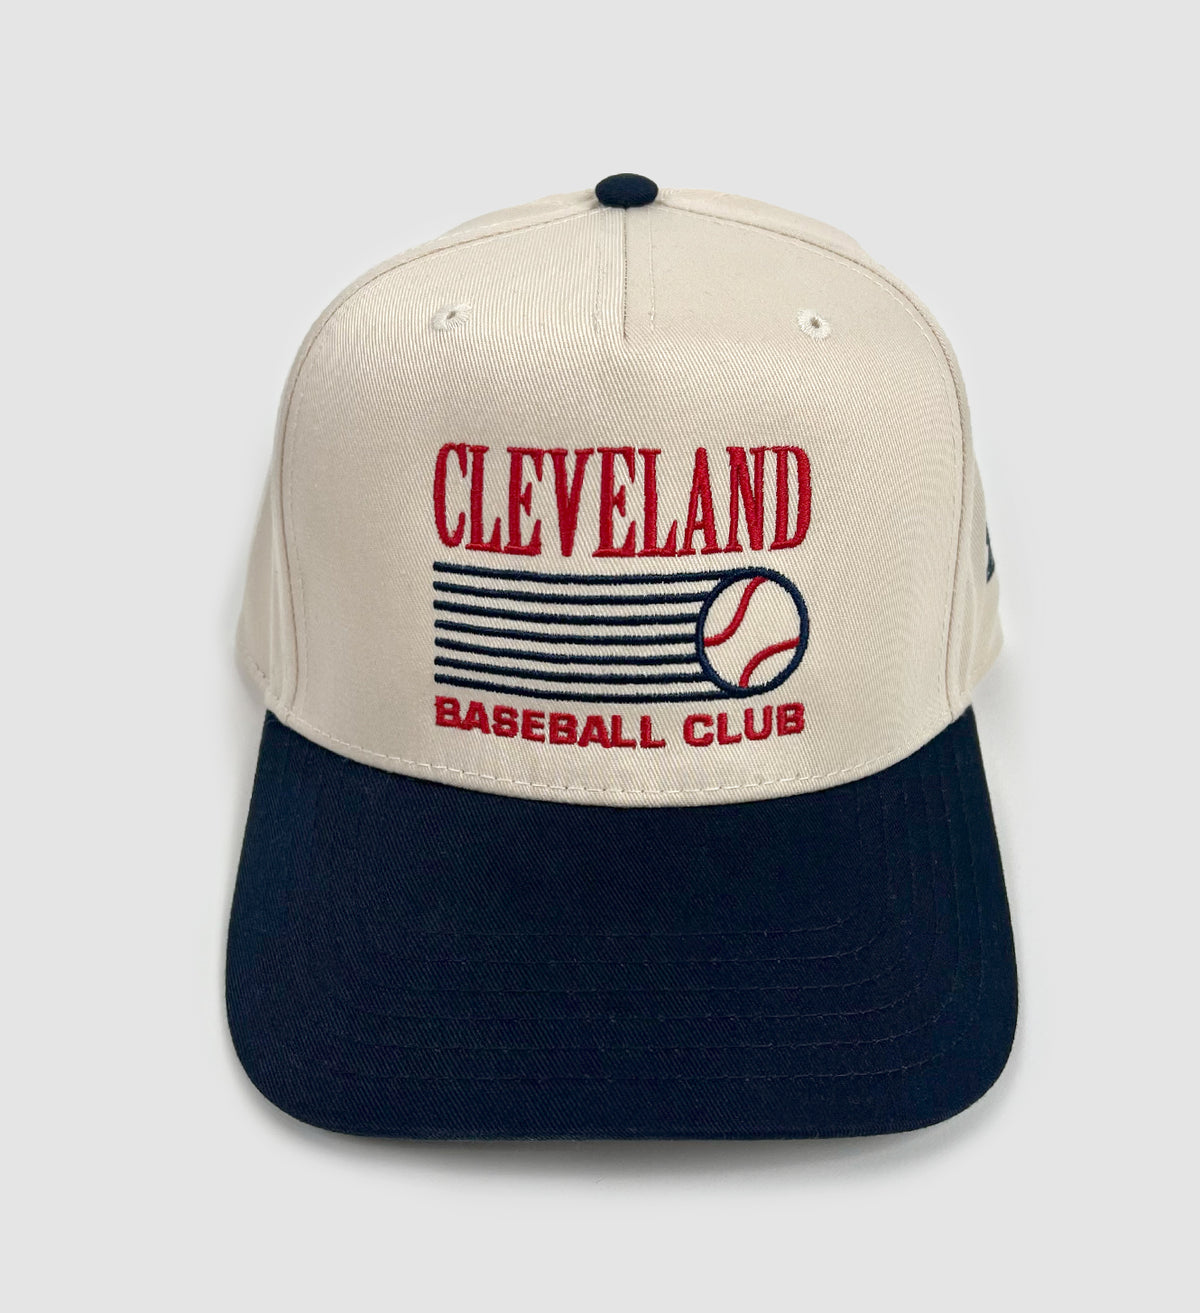 Cleveland Baseball Club Two Tone Snap Back